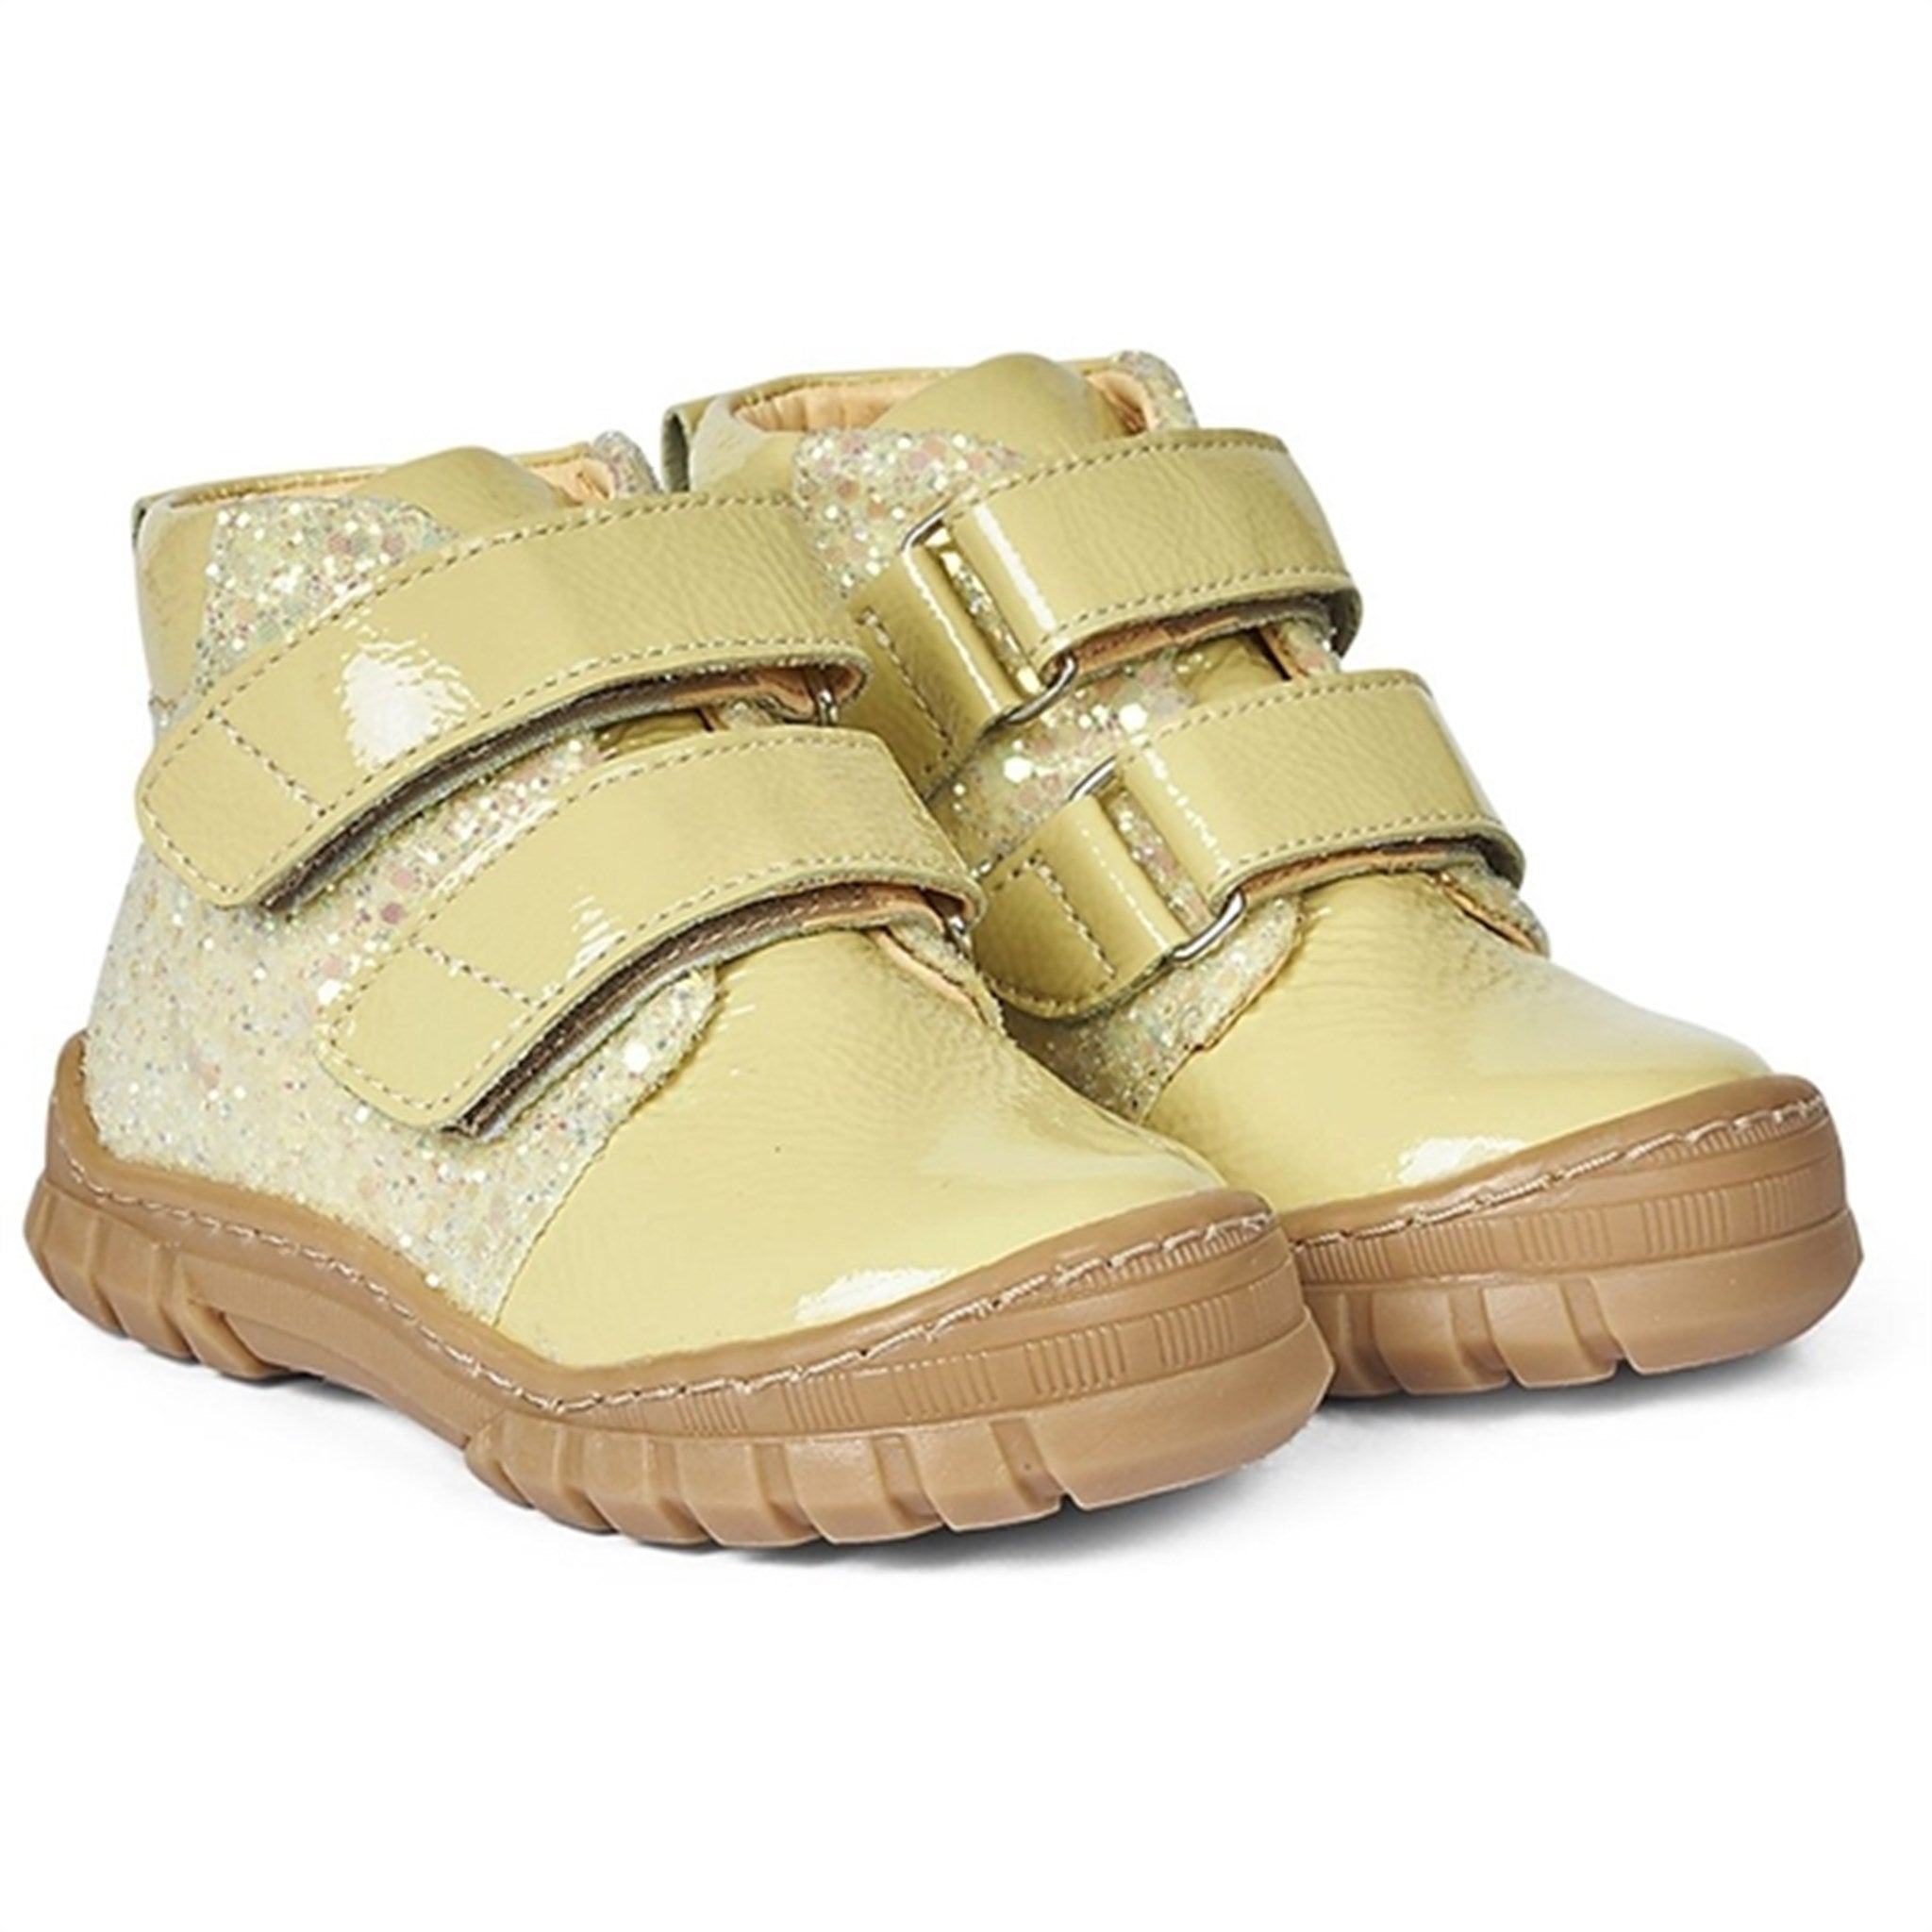 Angulus Starter Shoe W. Velcro And Glitter Details Light Yellow/Light Yellow Glitter